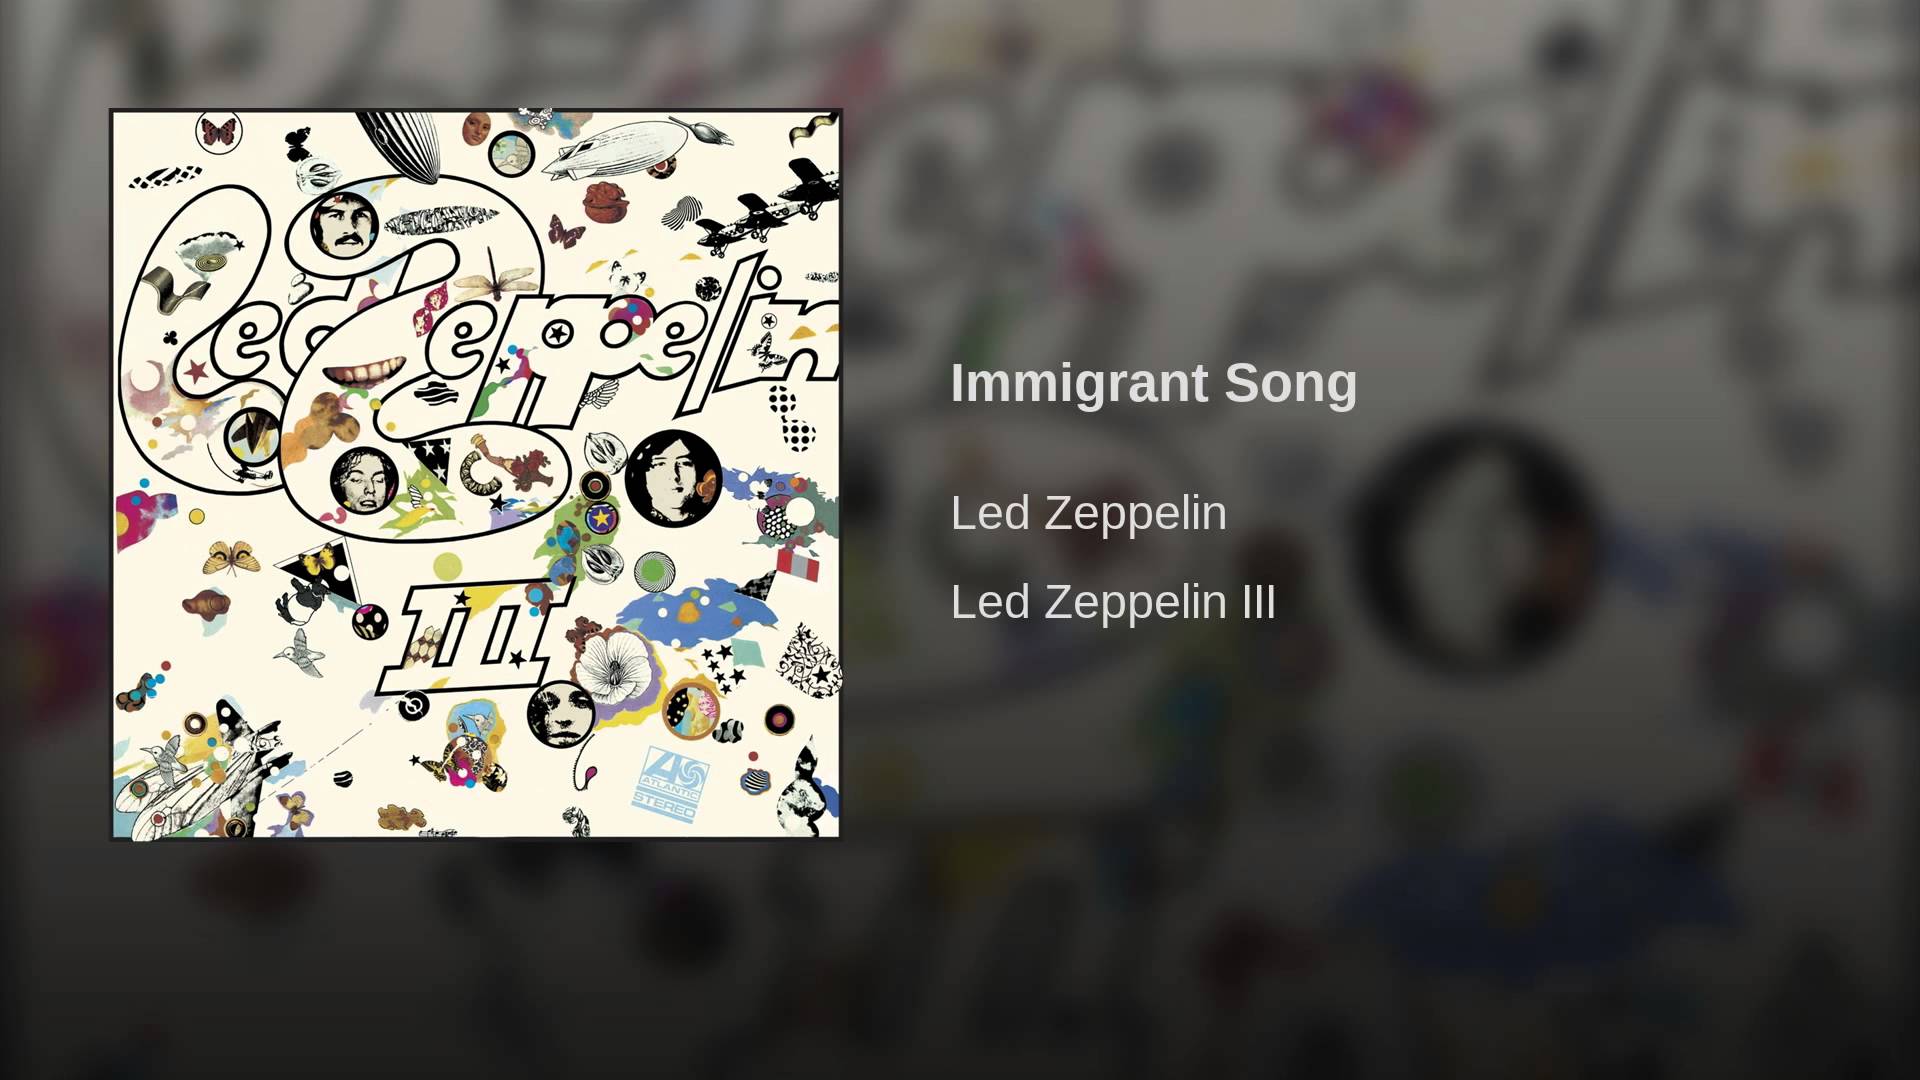 Led since. Since i've been loving you led Zeppelin. Led Zeppelin since. LEDS Zeppelin - since i've been loving you. Led Zeppelin Tangerine.